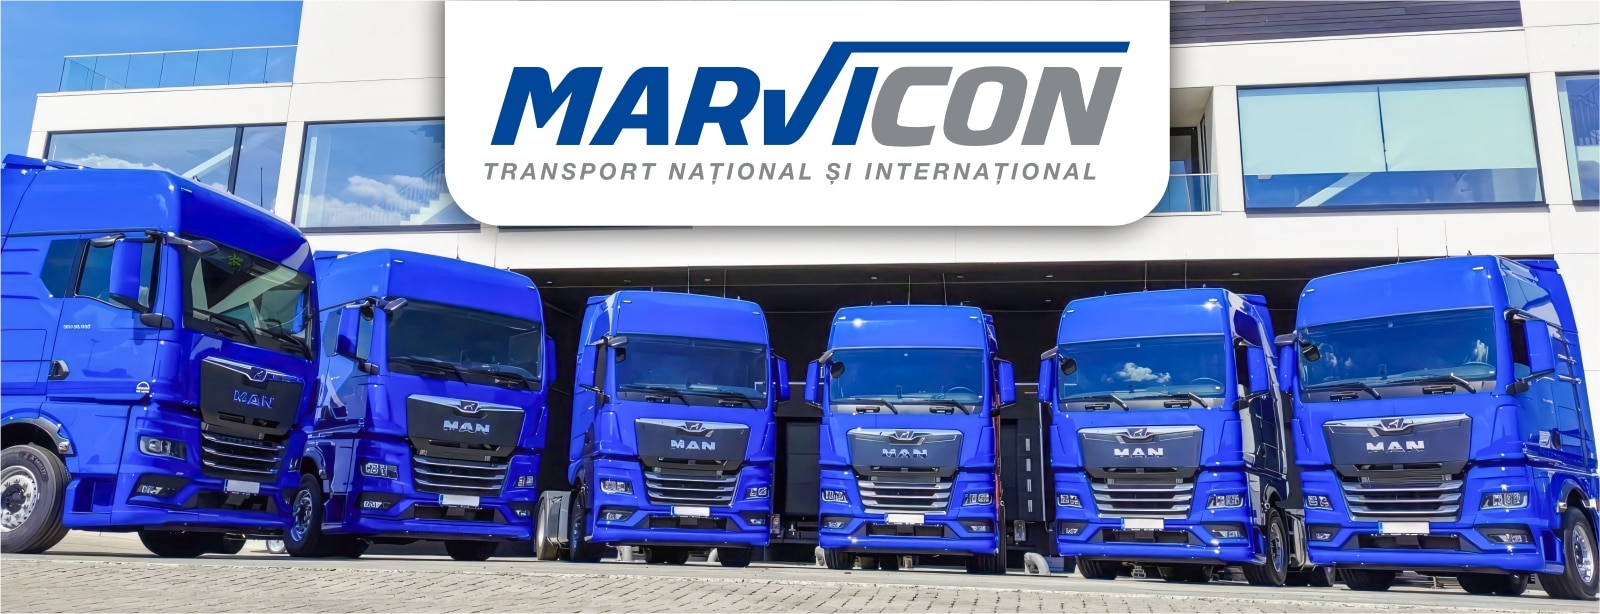 Marvicon Transport National si International